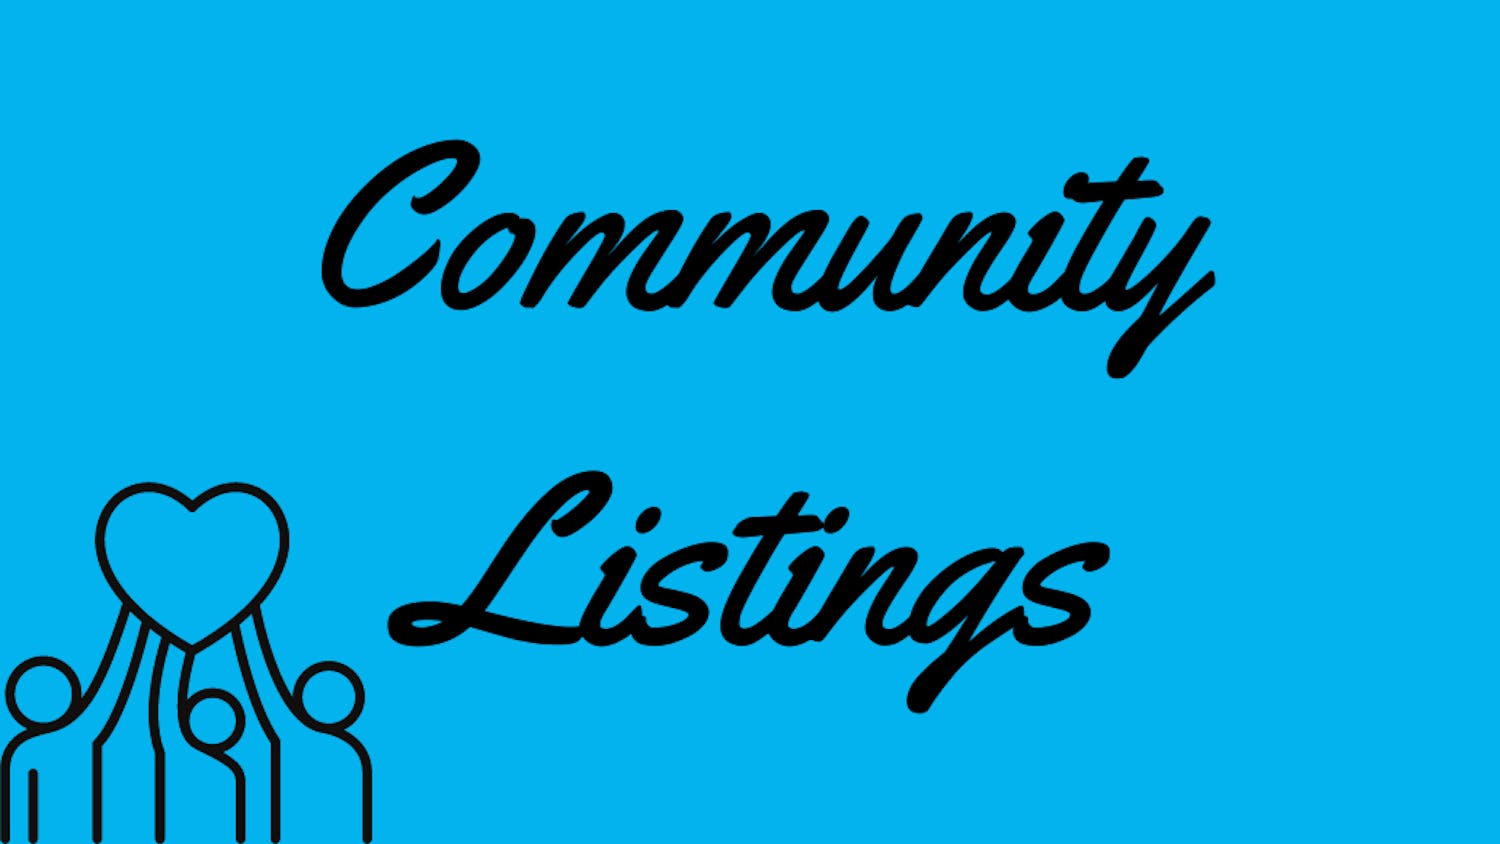 Observer headers - Community Listings